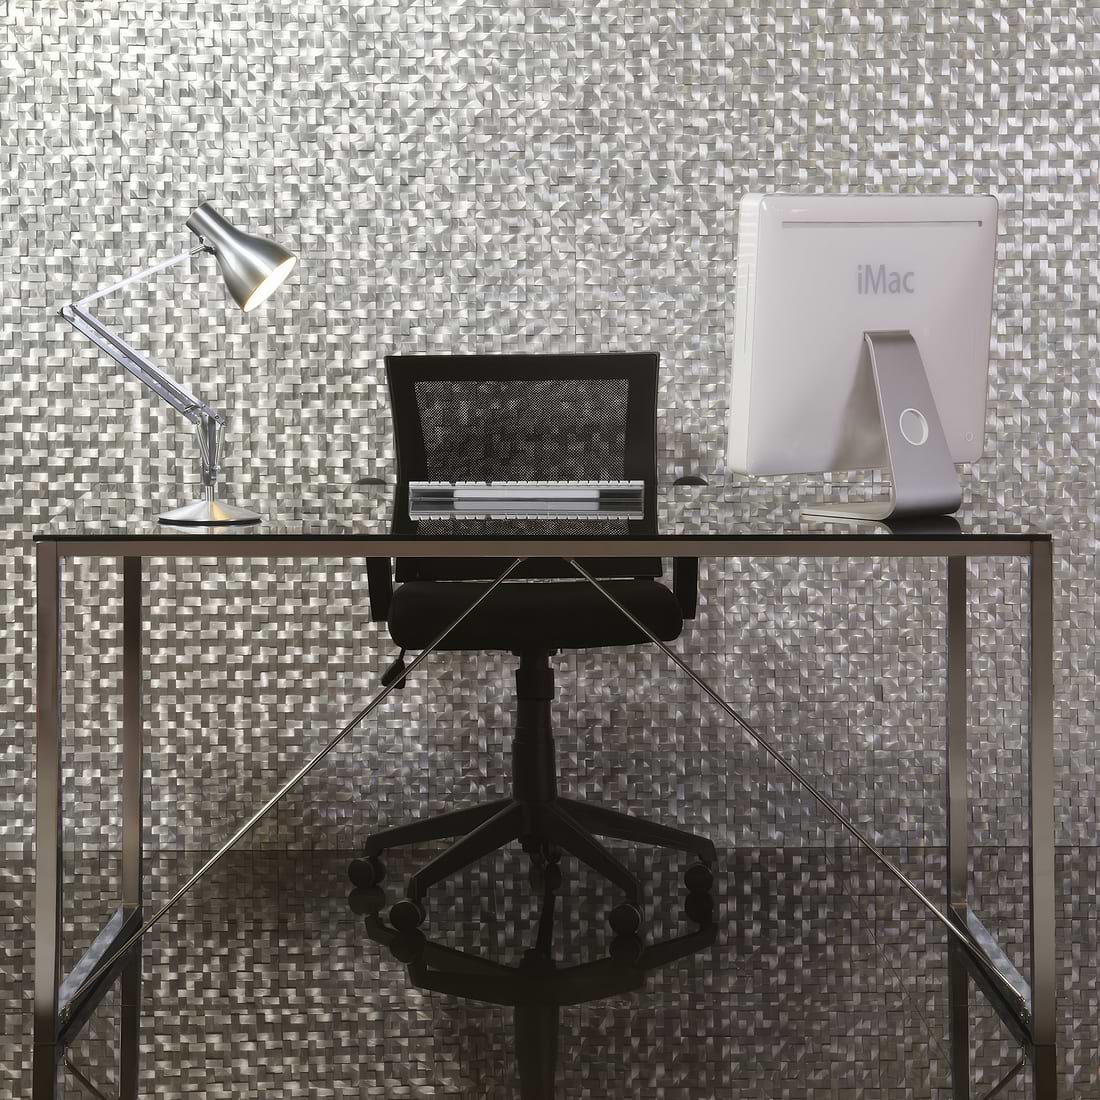 Torque Aluminium Mosaic - Hyperion Tiles